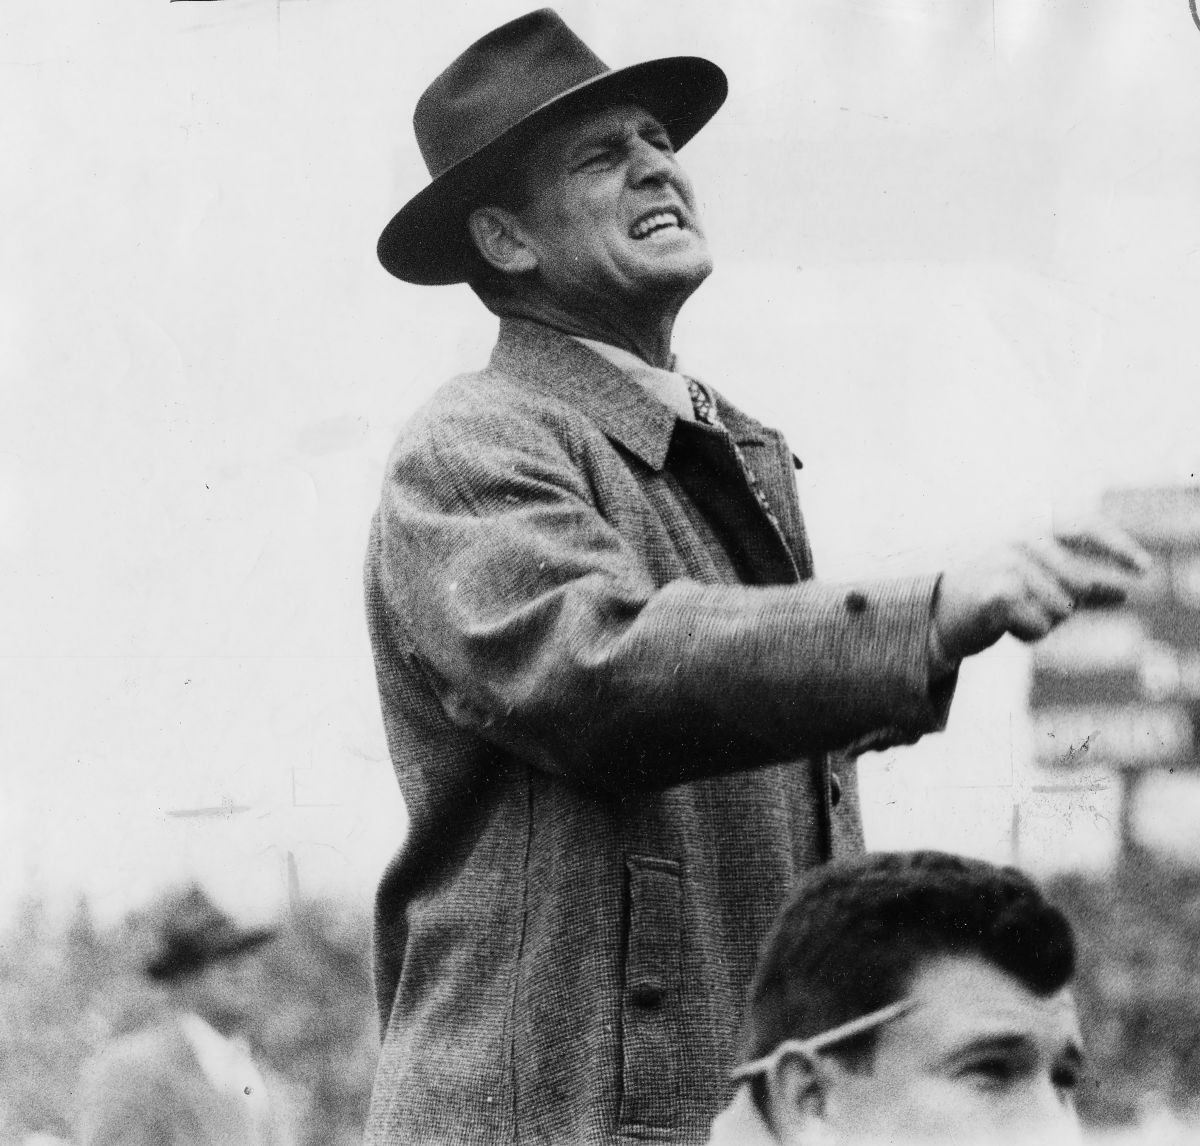 Paul W. "Bear" Bryant as the head coach at Kentucky